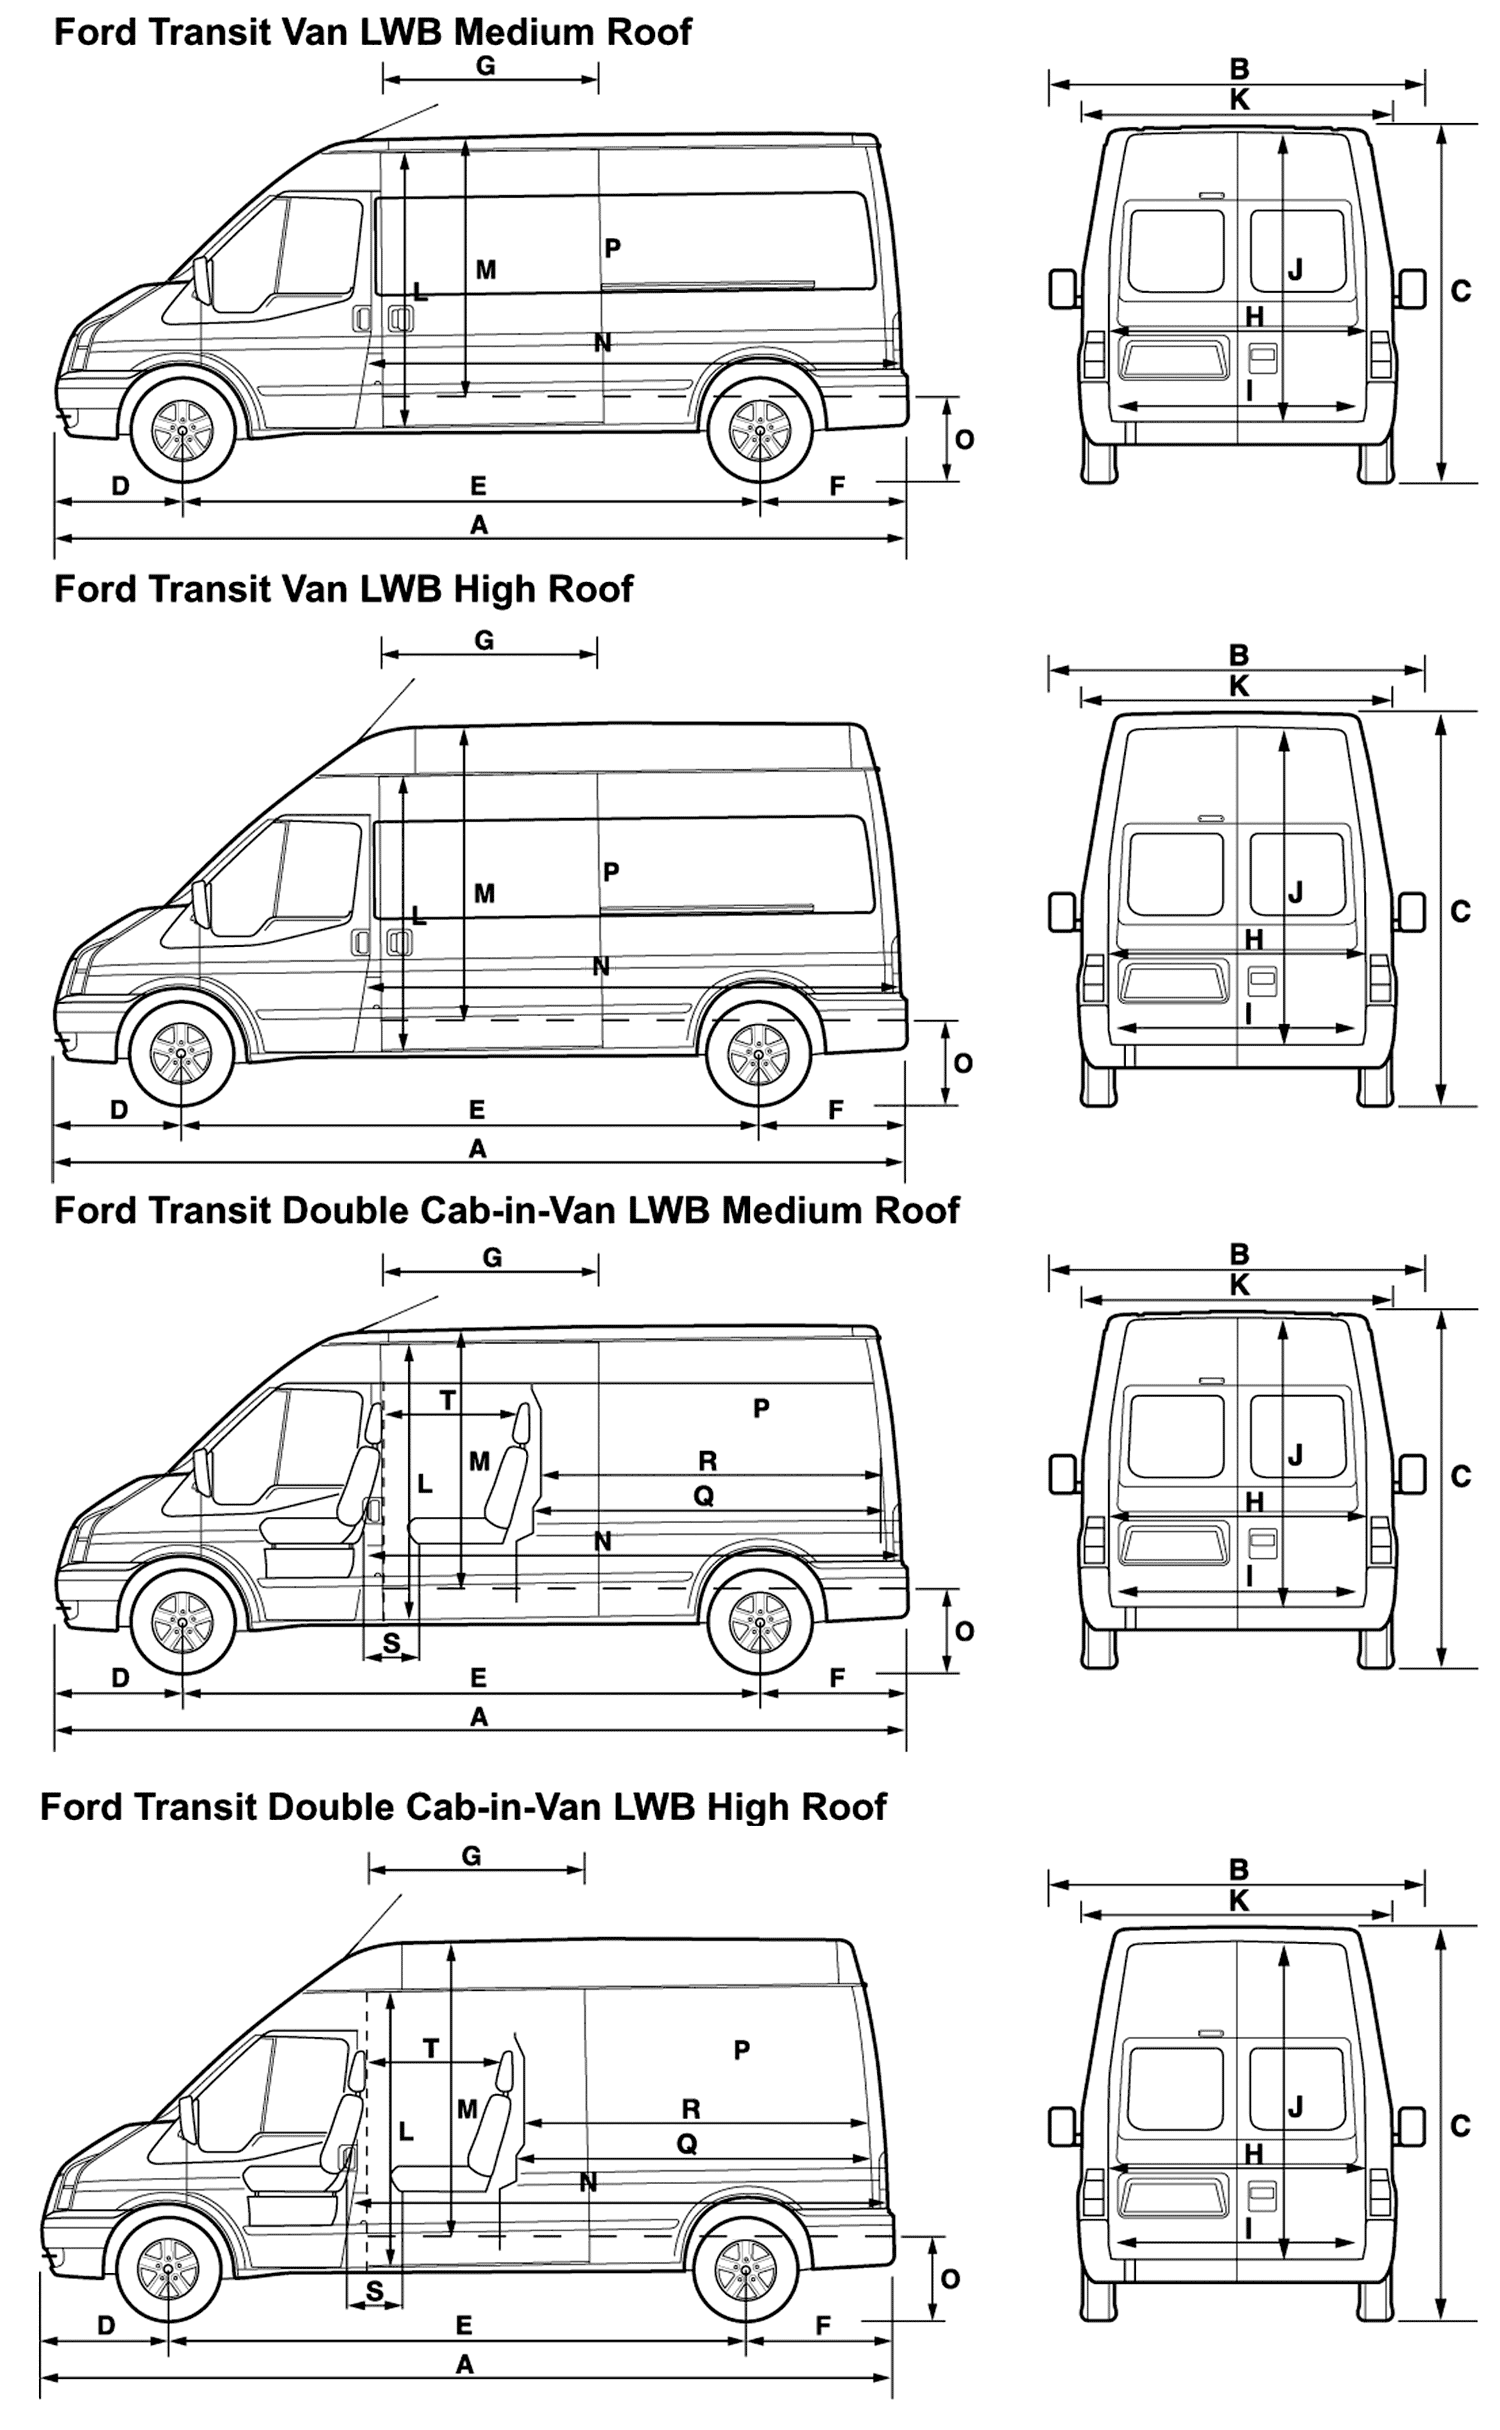 Ford Transit (Форд Транзит) - Продажа, Цены, Отзывы, Фото